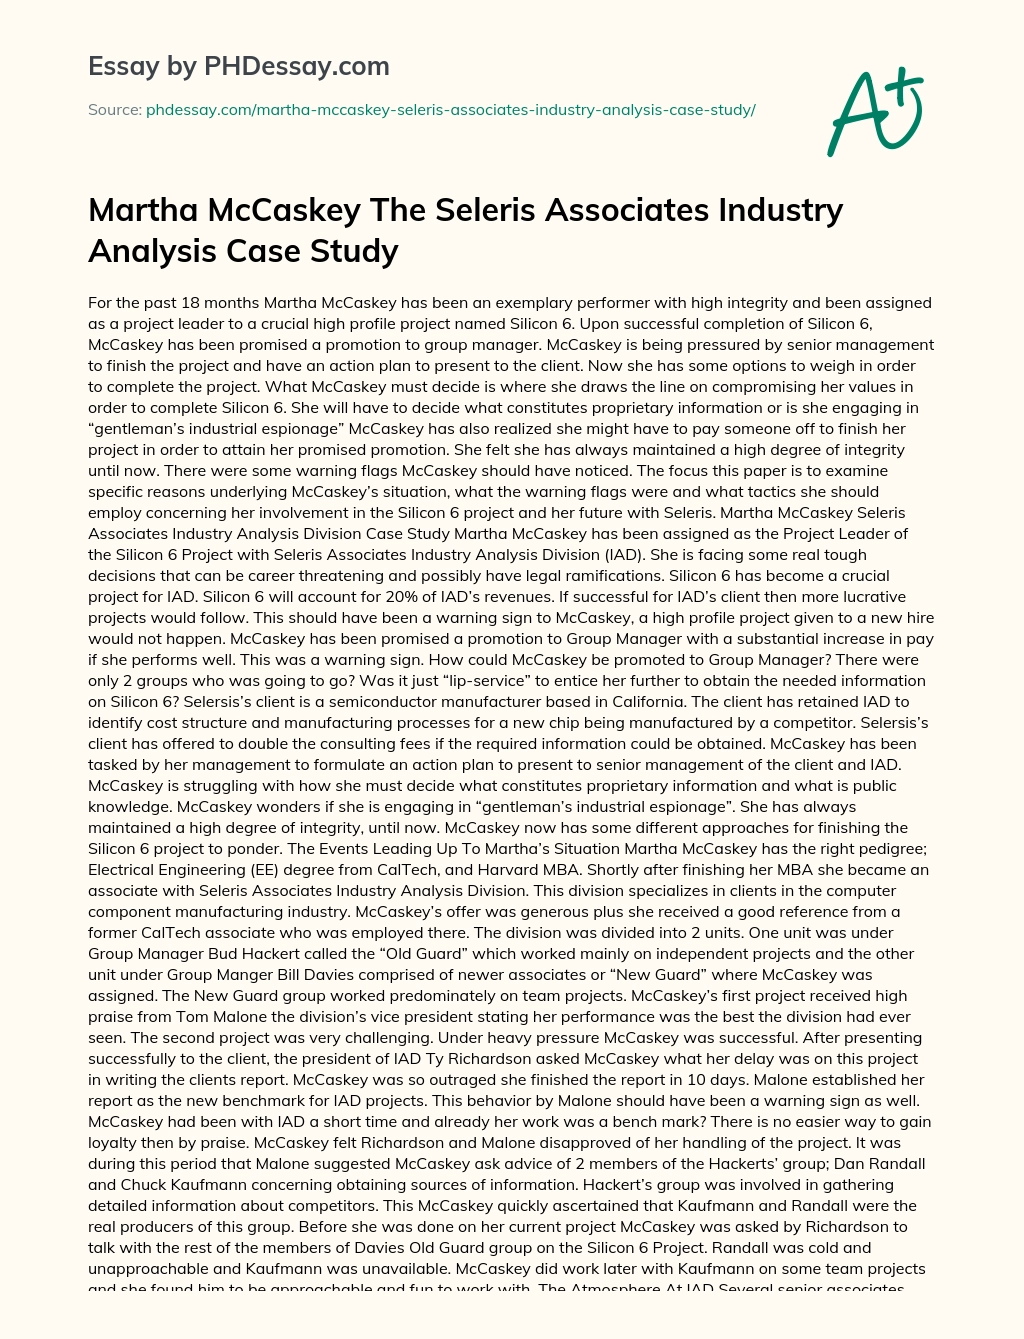 Martha McCaskey The Seleris Associates Industry Analysis Case Study essay